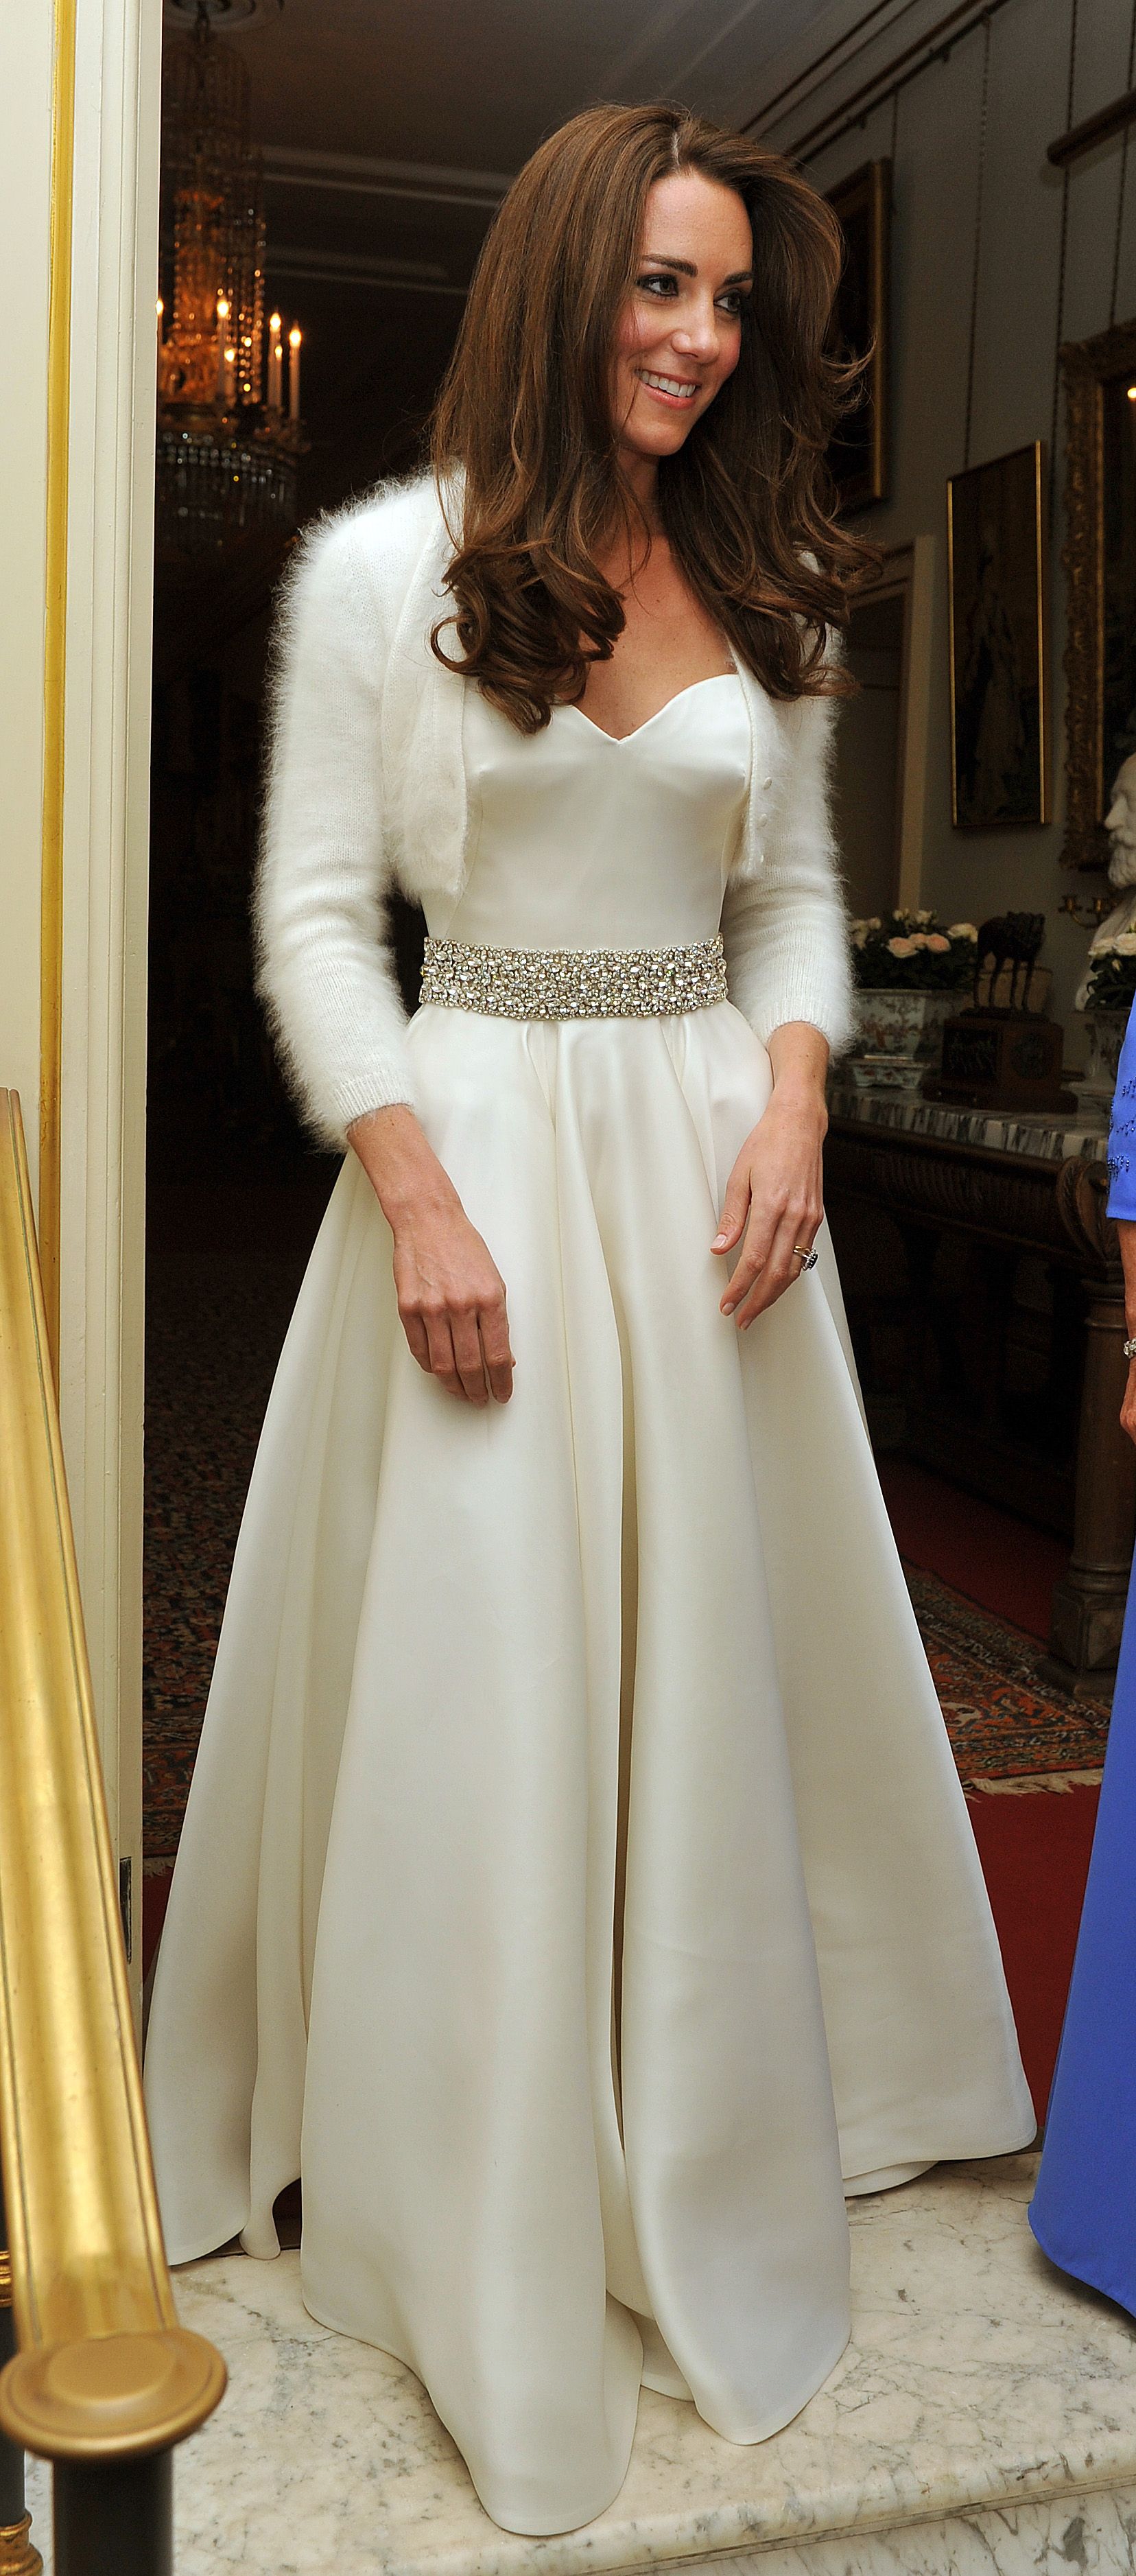 Buy > princess catherine wedding dress > in stock